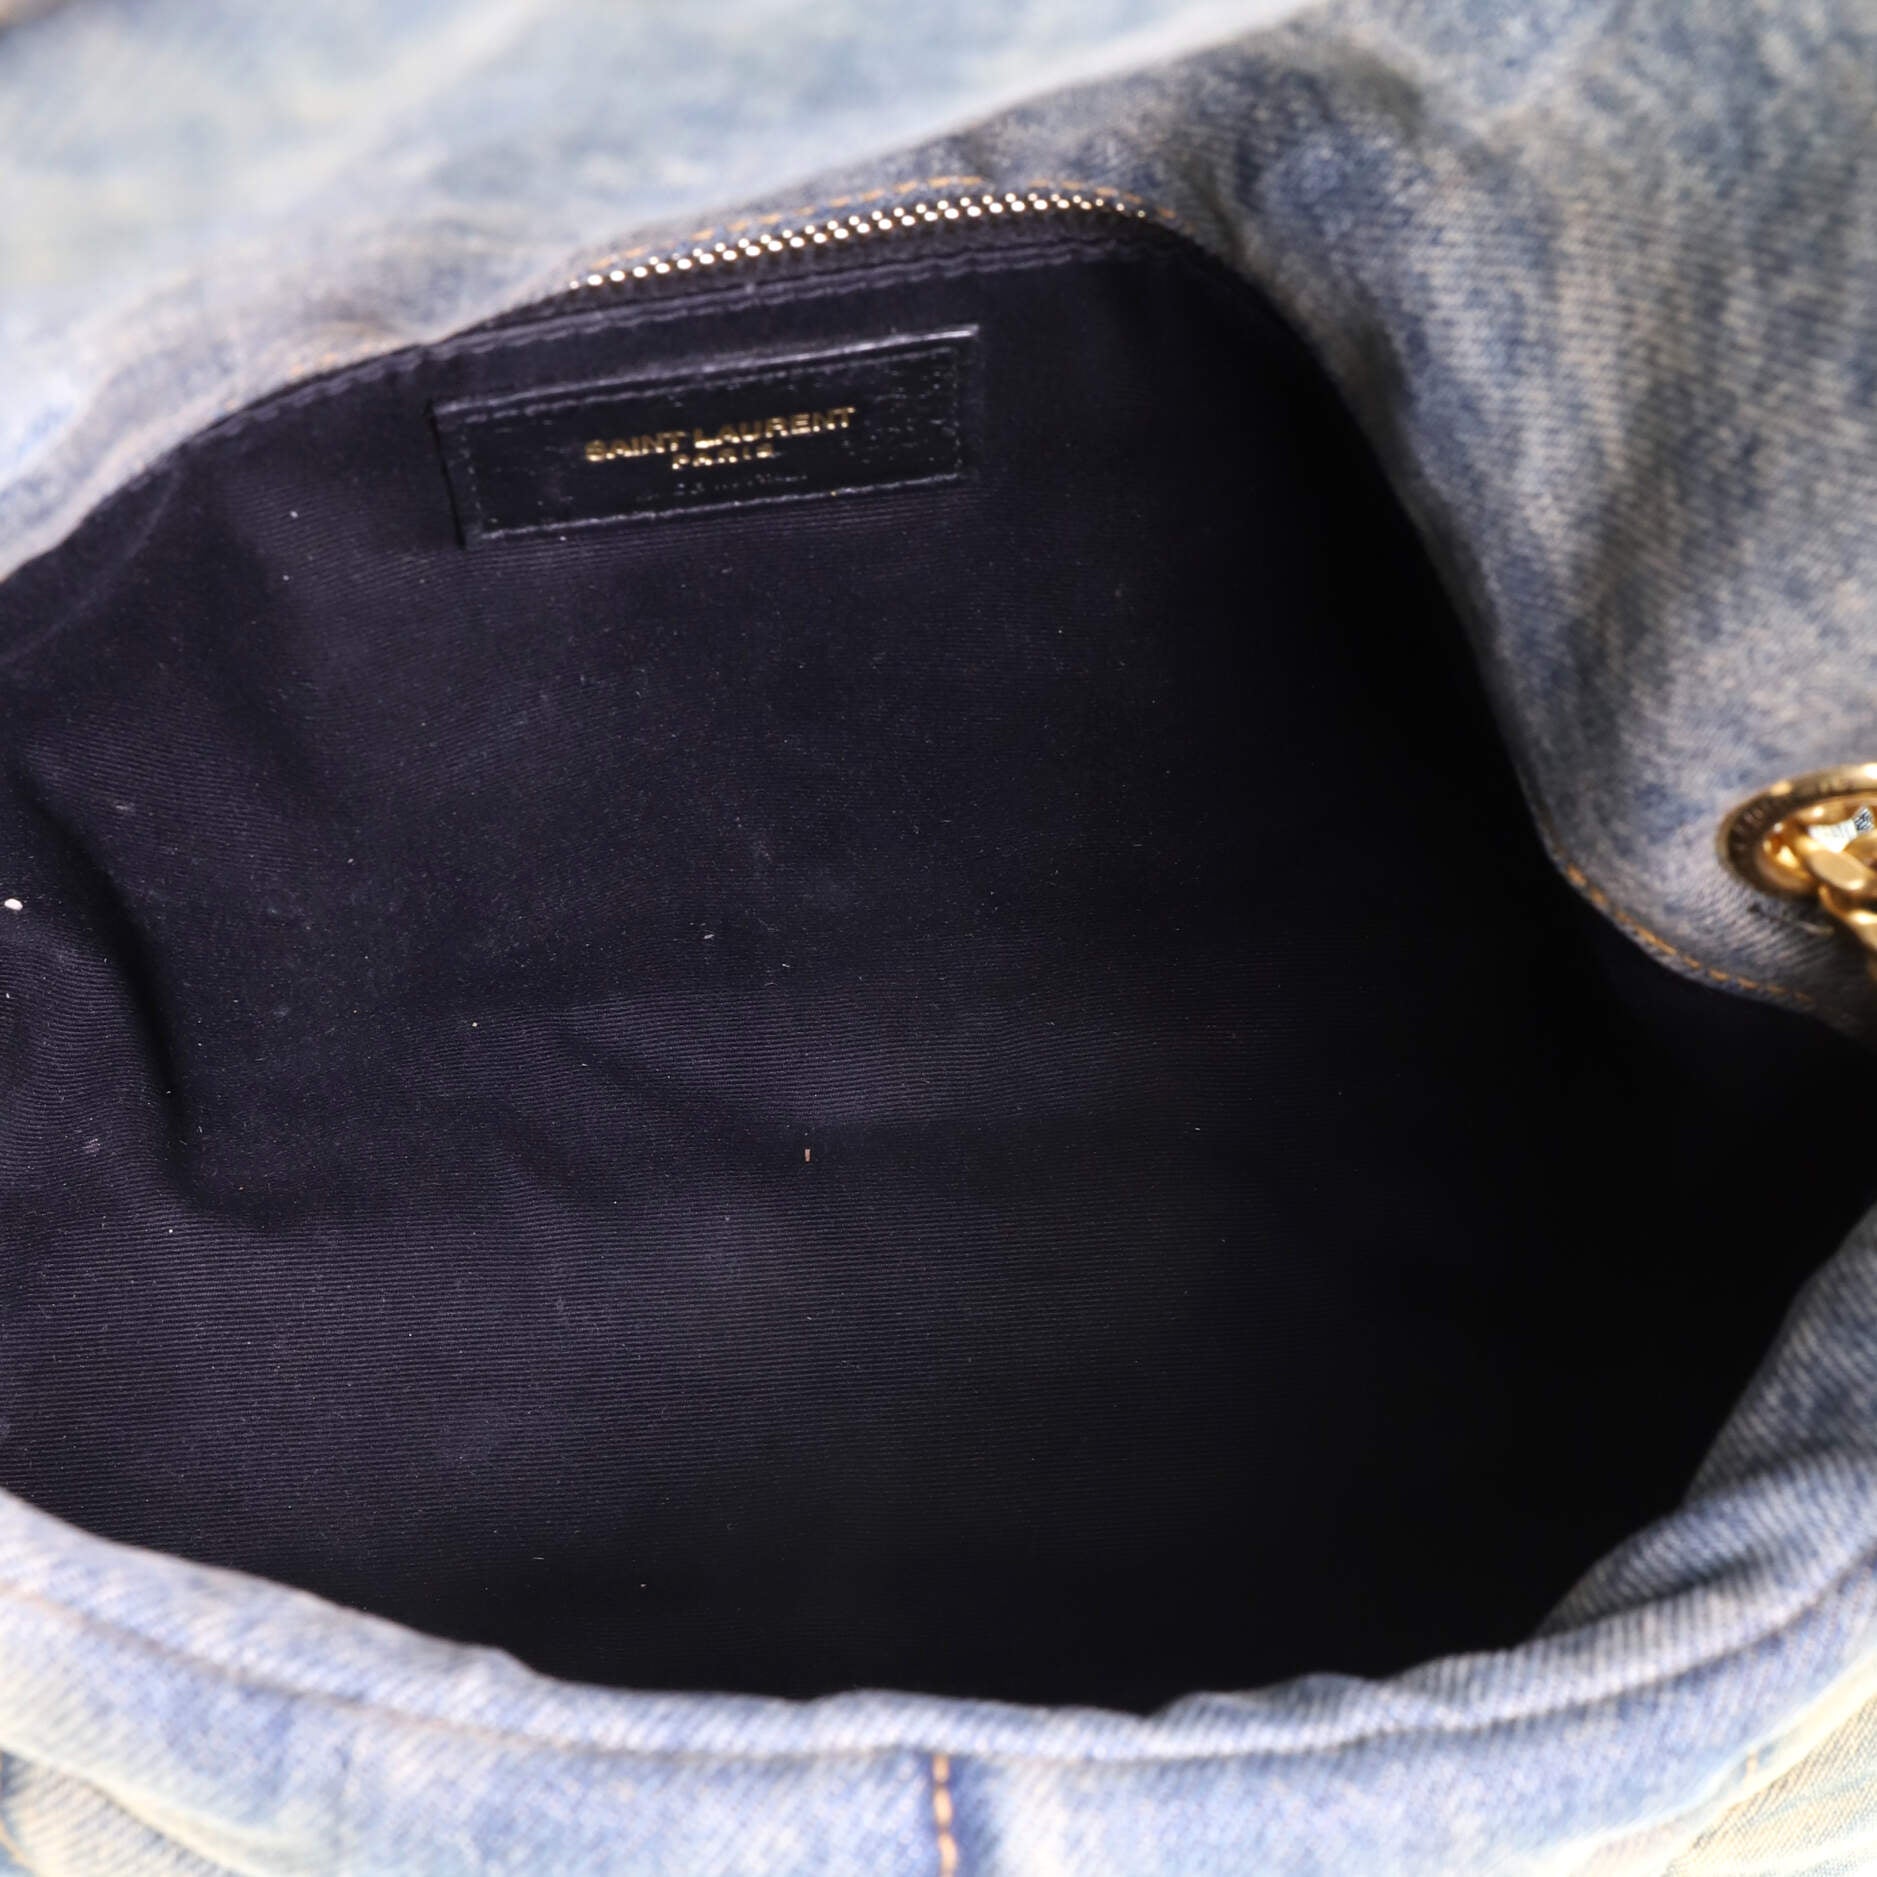 Saint Laurent Puffer Medium Quilted Denim Shoulder Bag - Rodeo Blue